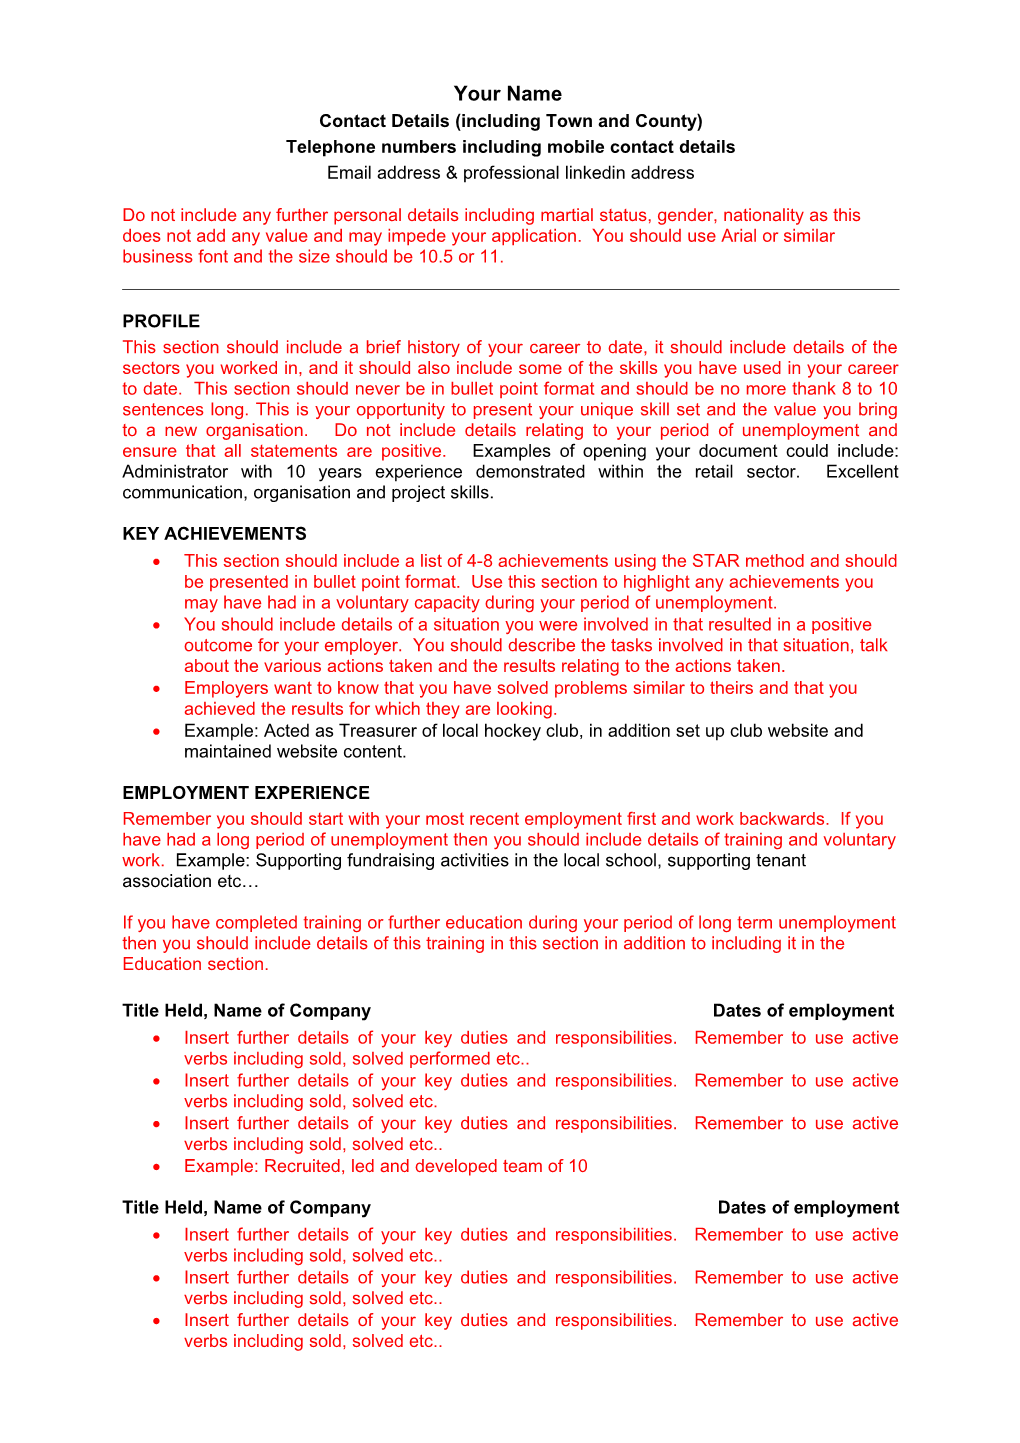 CV Template - Toatal Jobs Long-Term-Unemployed